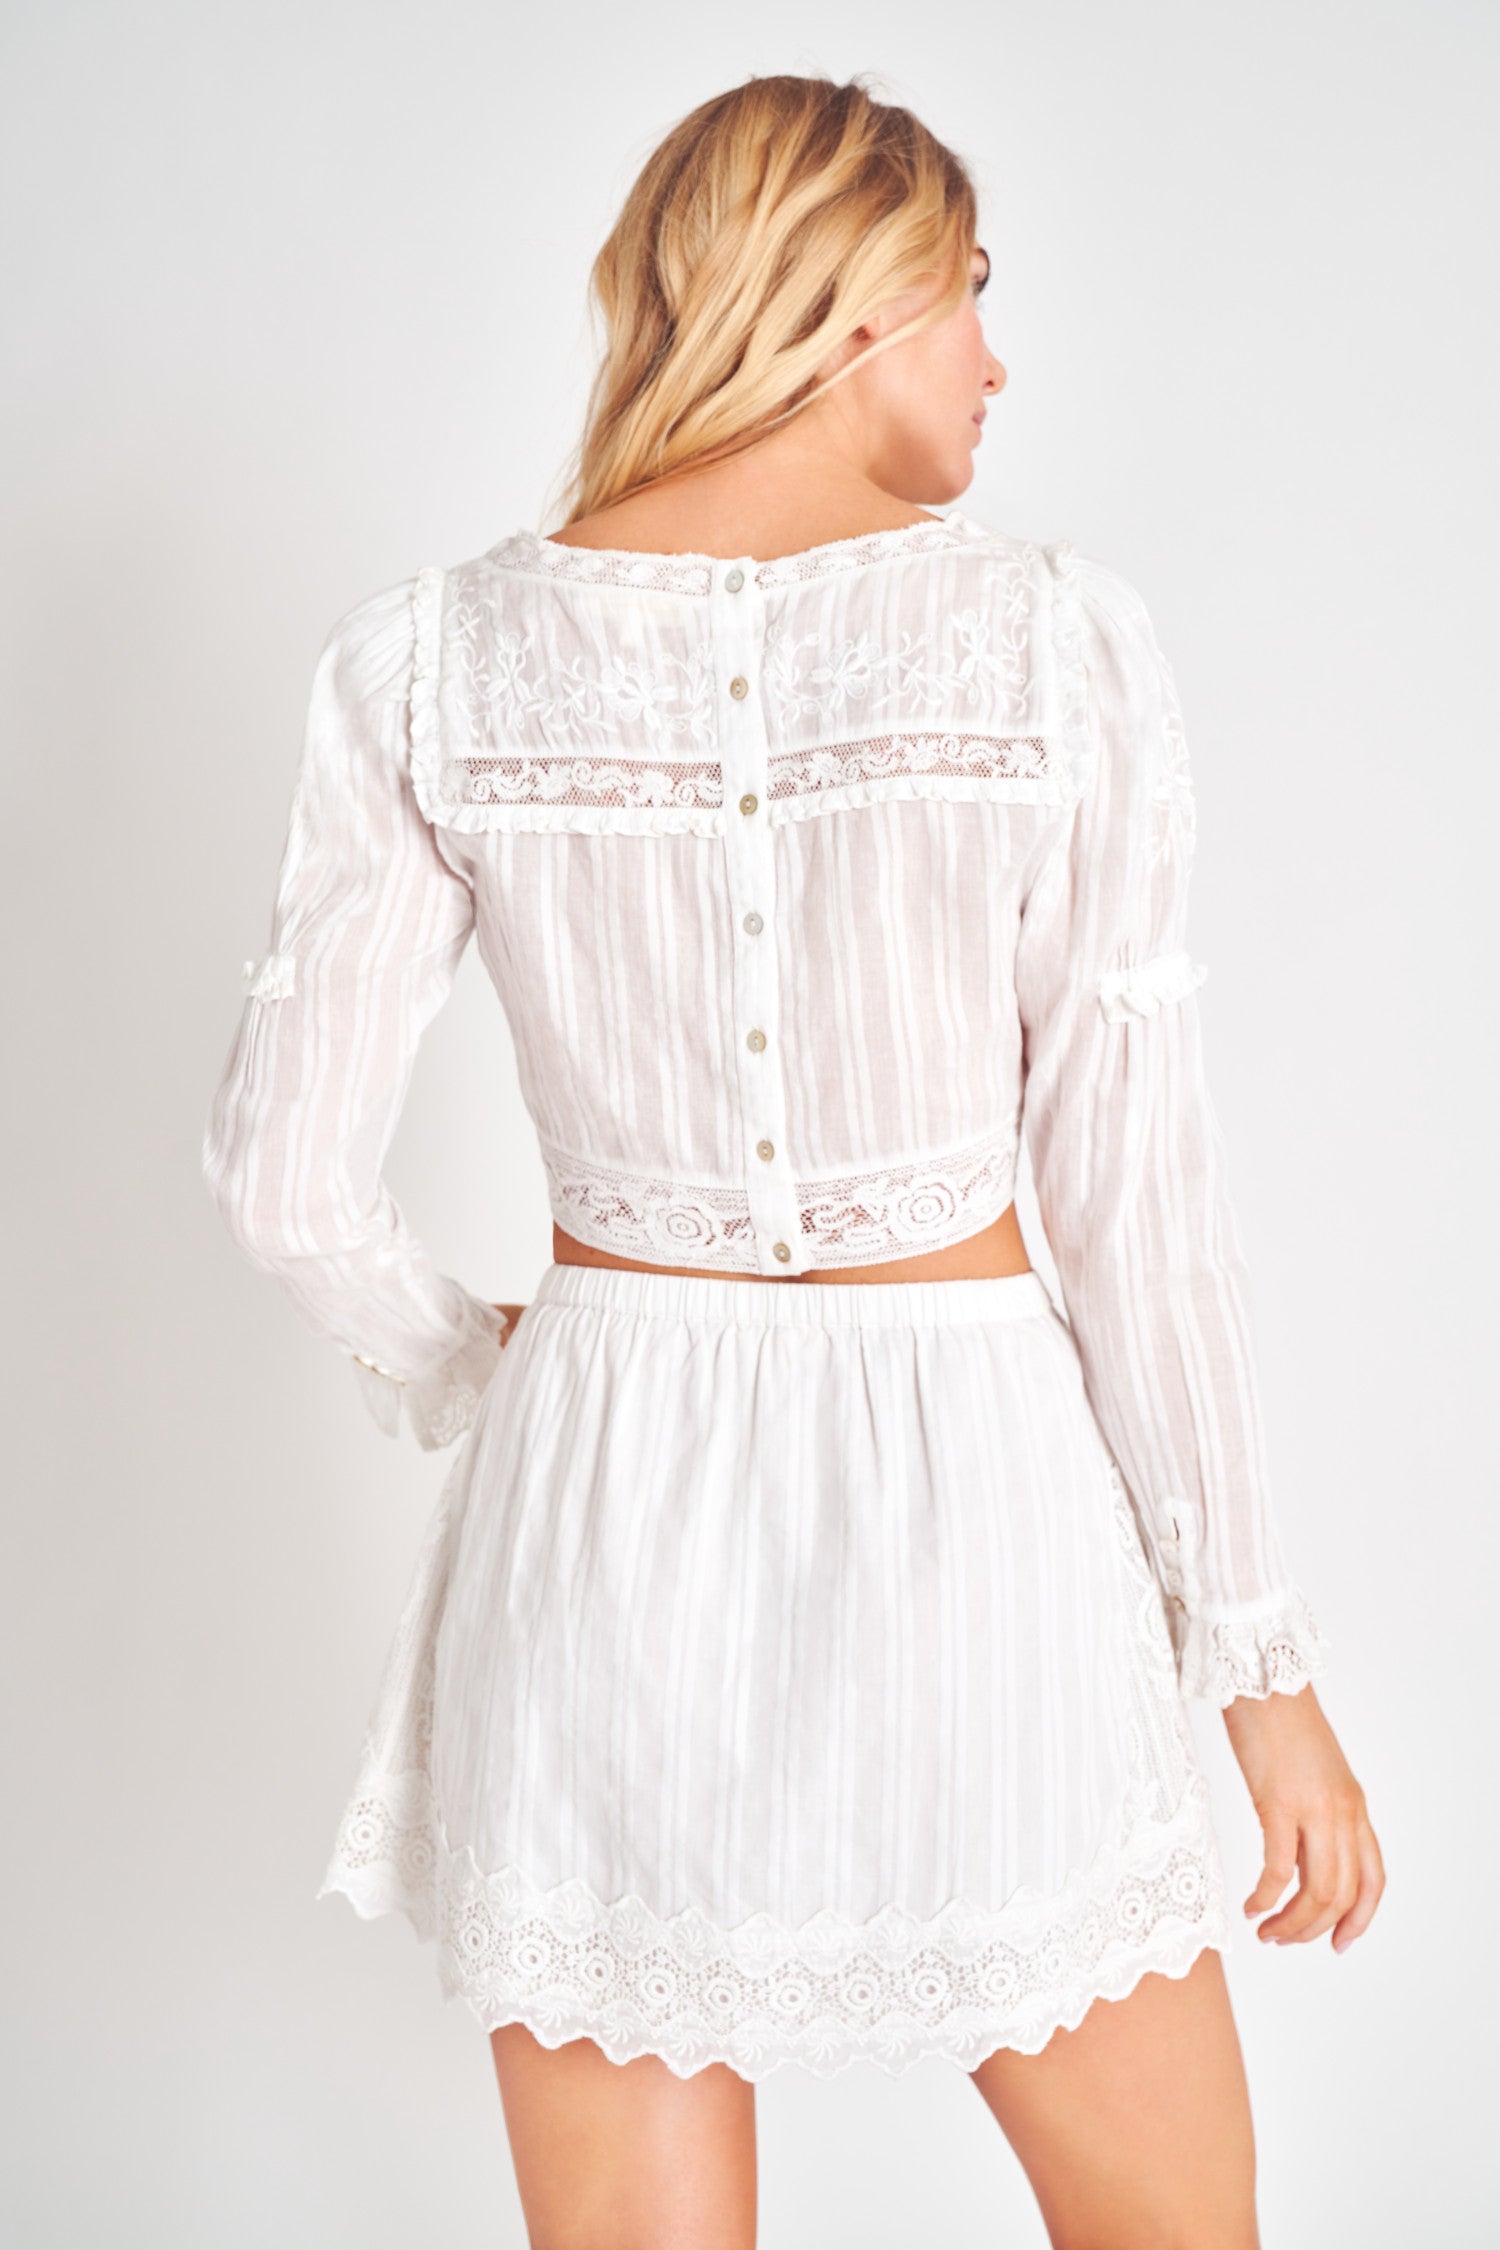 A-line white mini embroidered trim skirt.